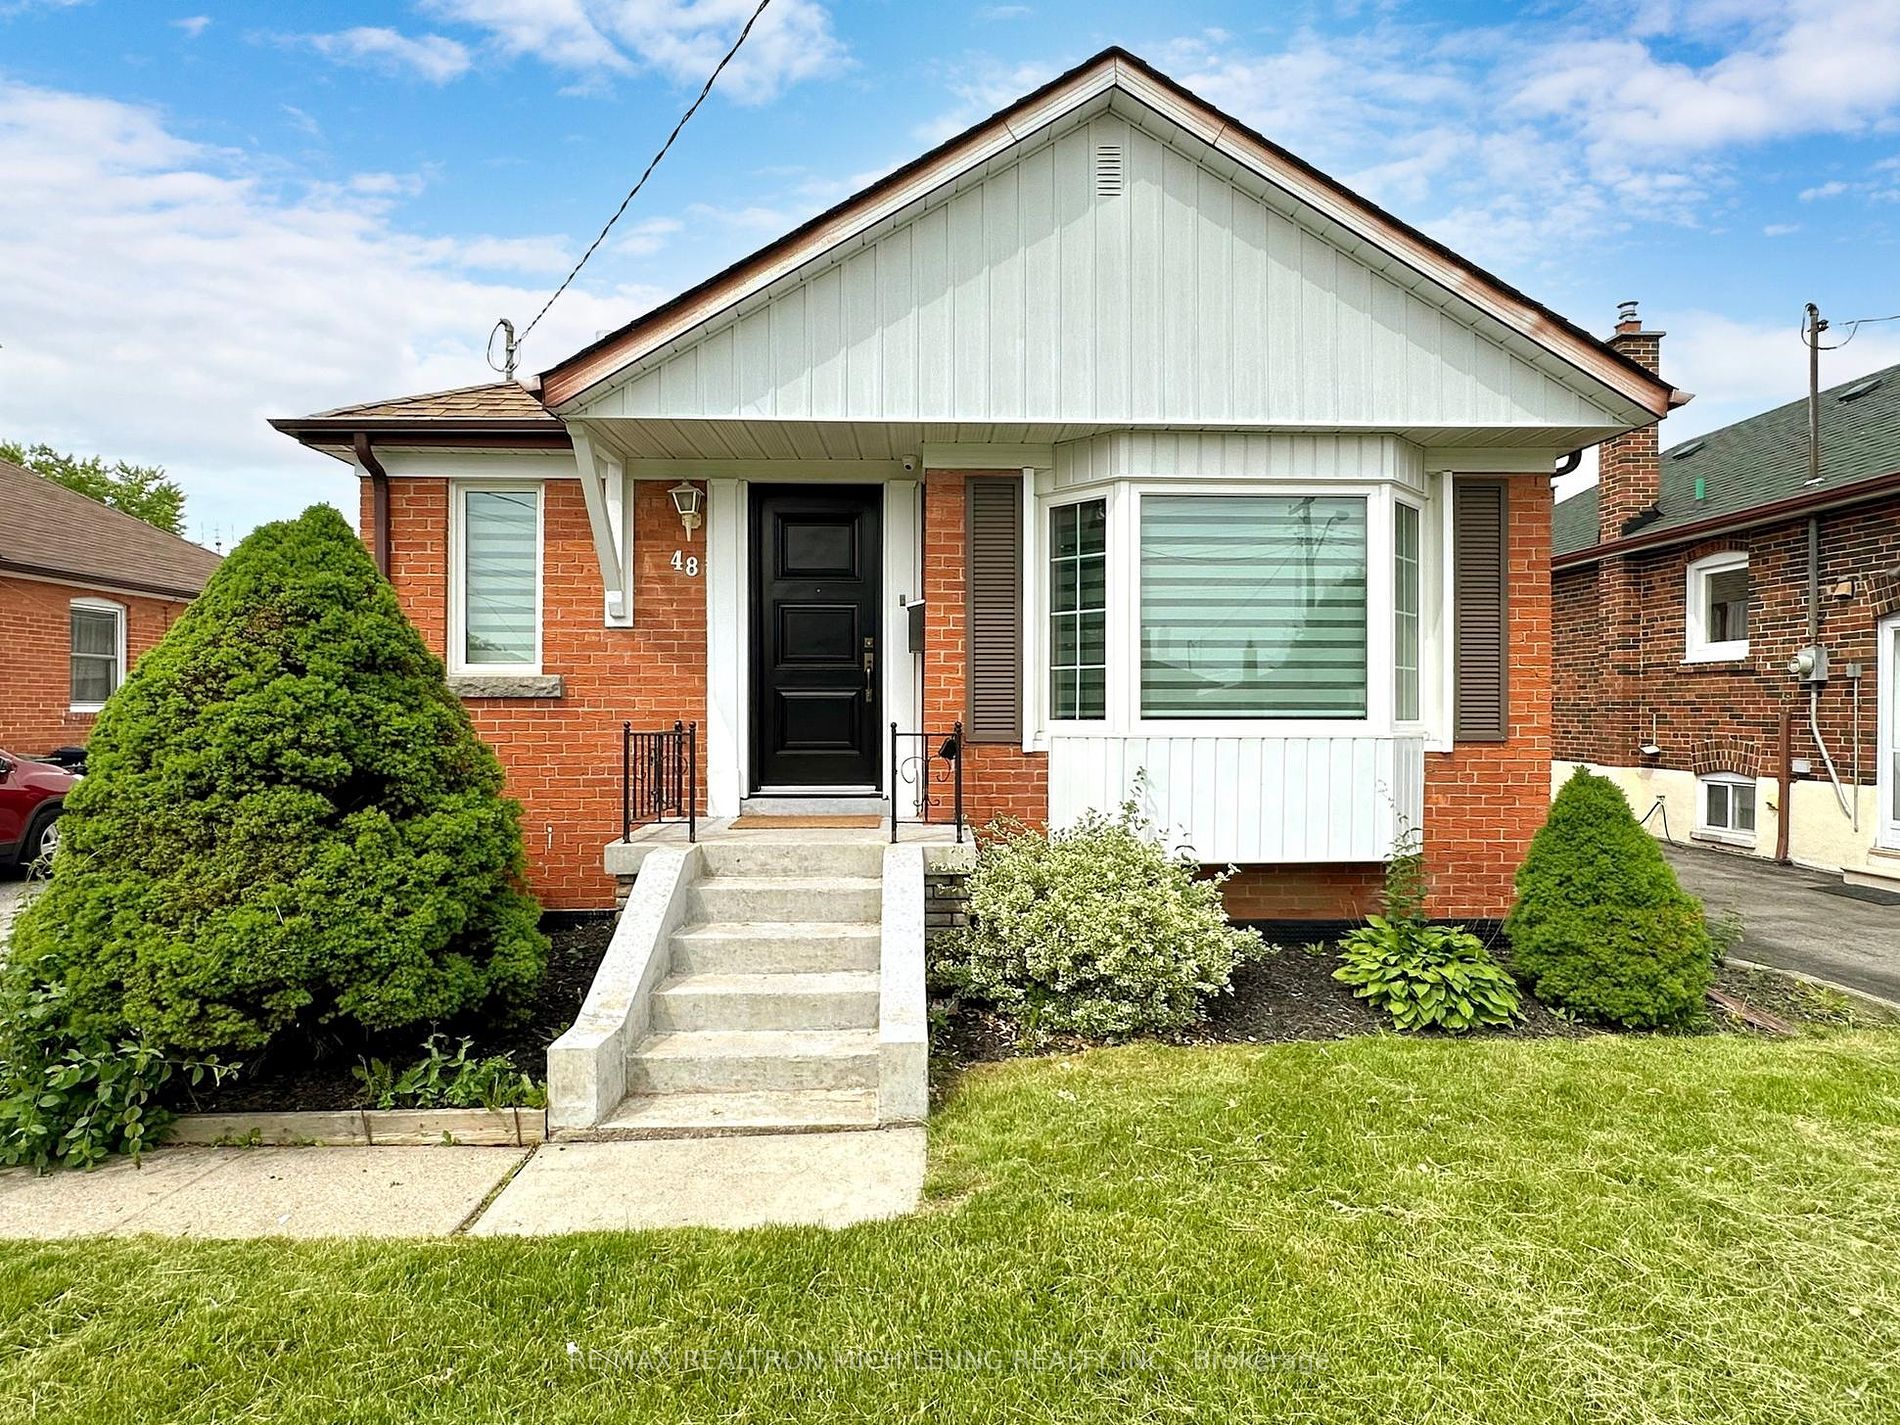 Detached house for sale at 48 Crosland Dr Toronto Ontario